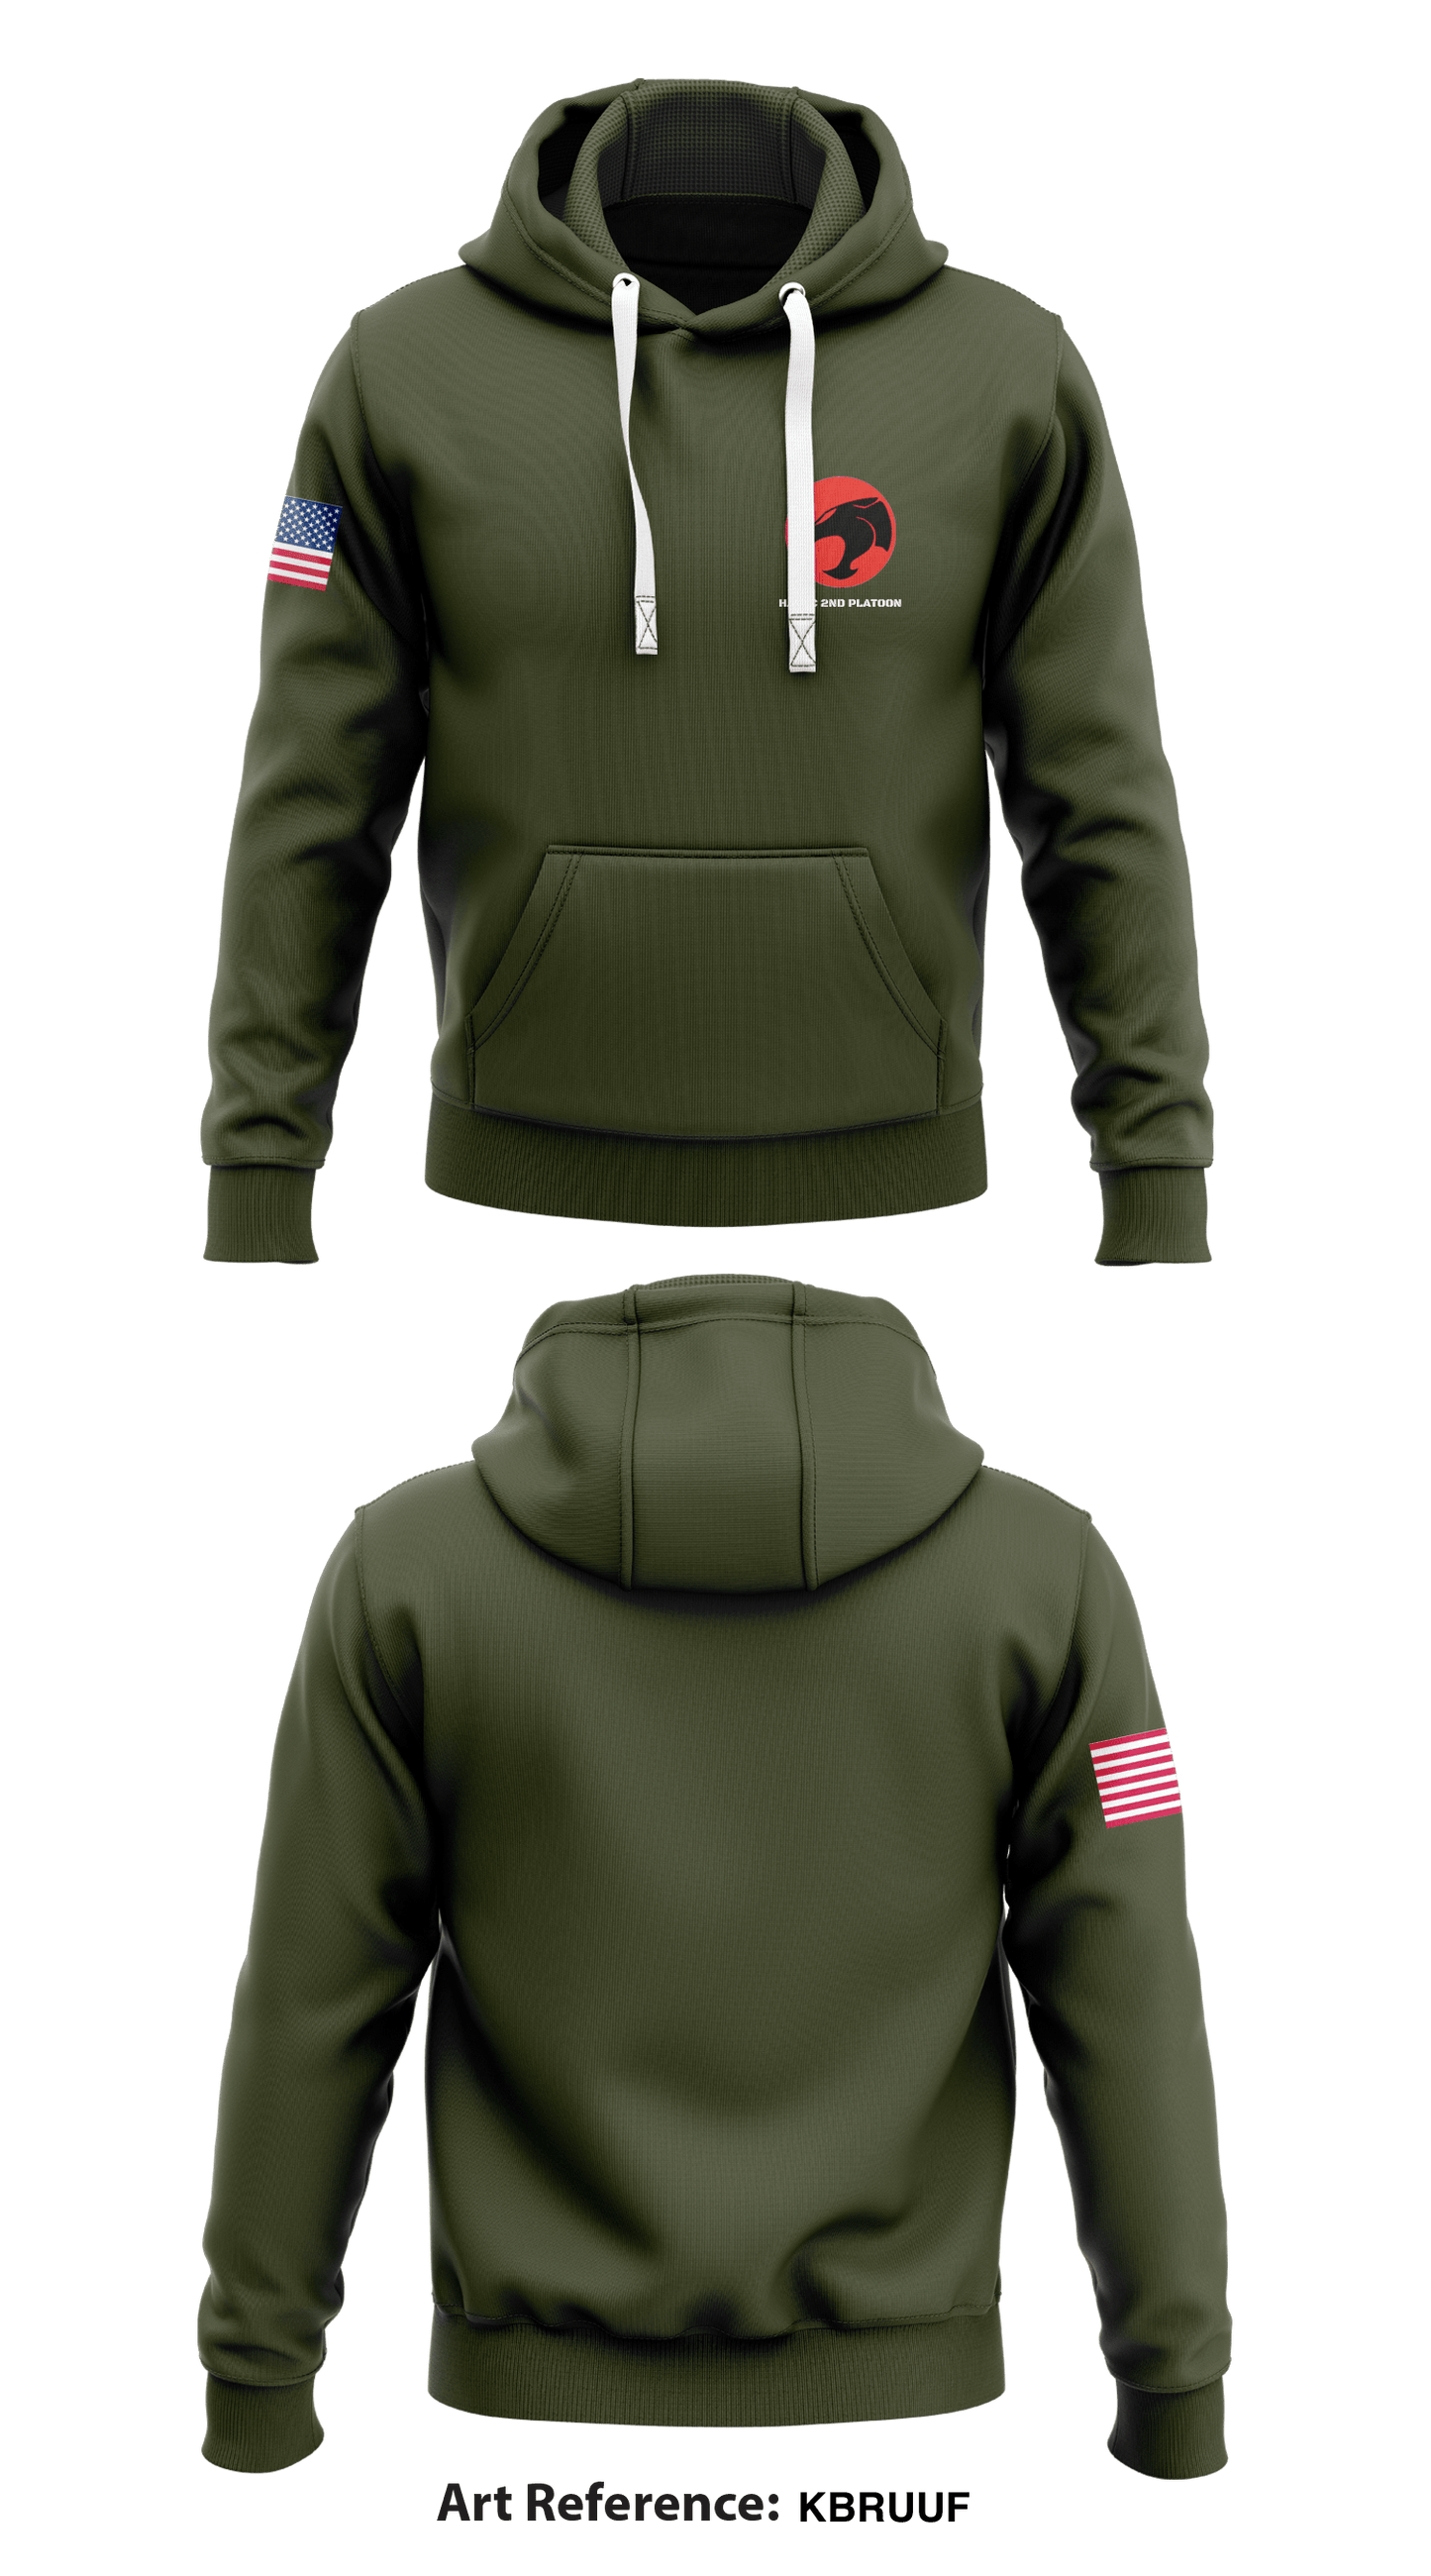 Havoc 2nd Platoon Store 1  Core Men's Hooded Performance Sweatshirt - KBRUuf